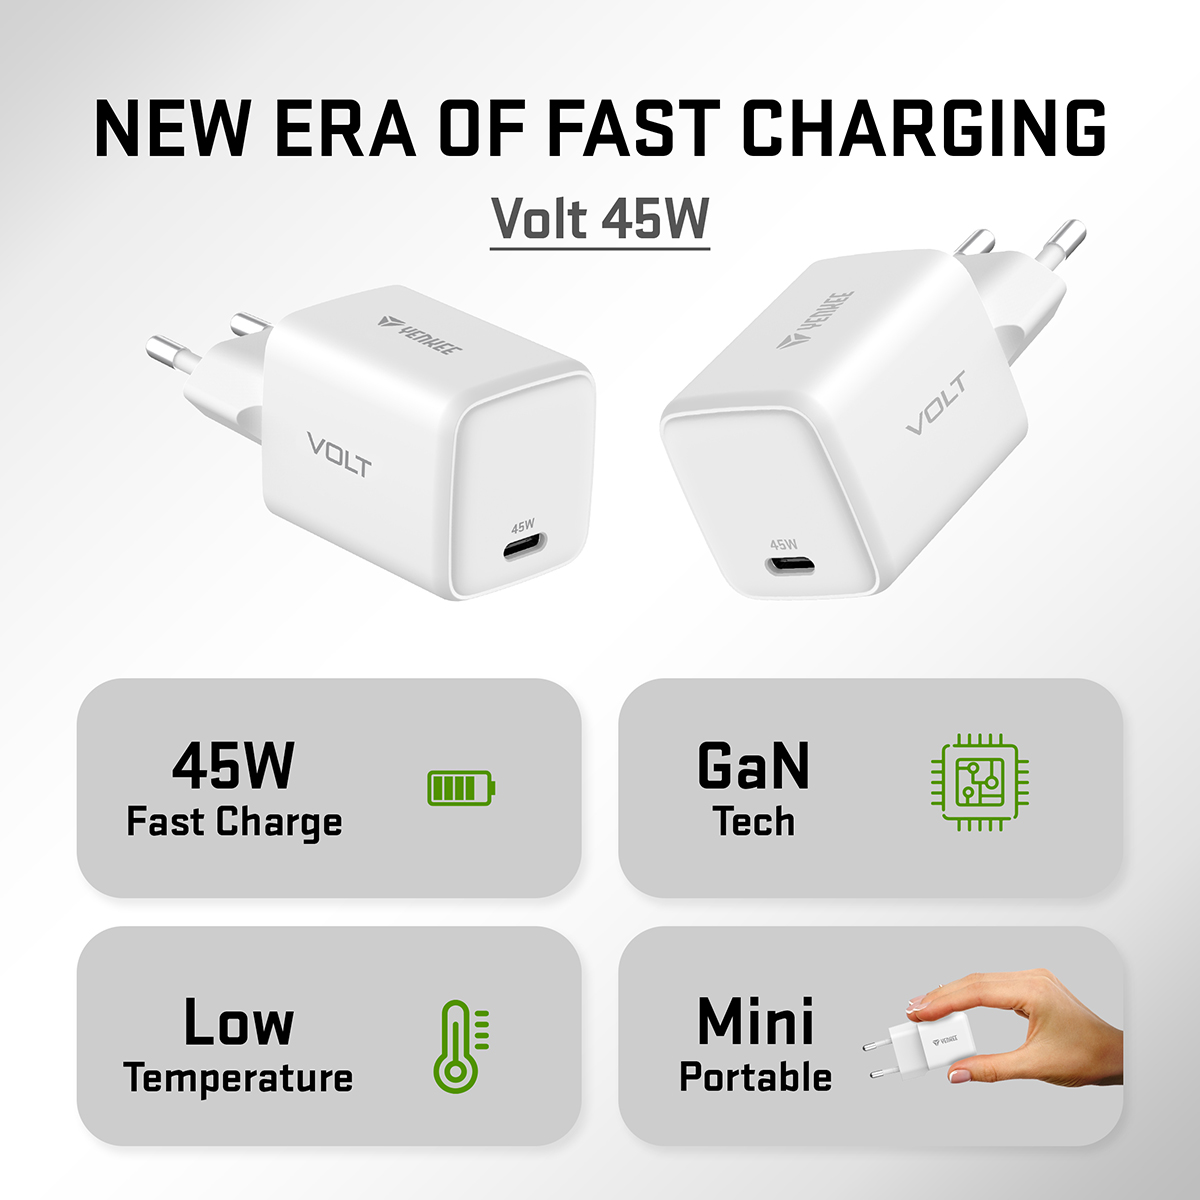 New era of fast charging